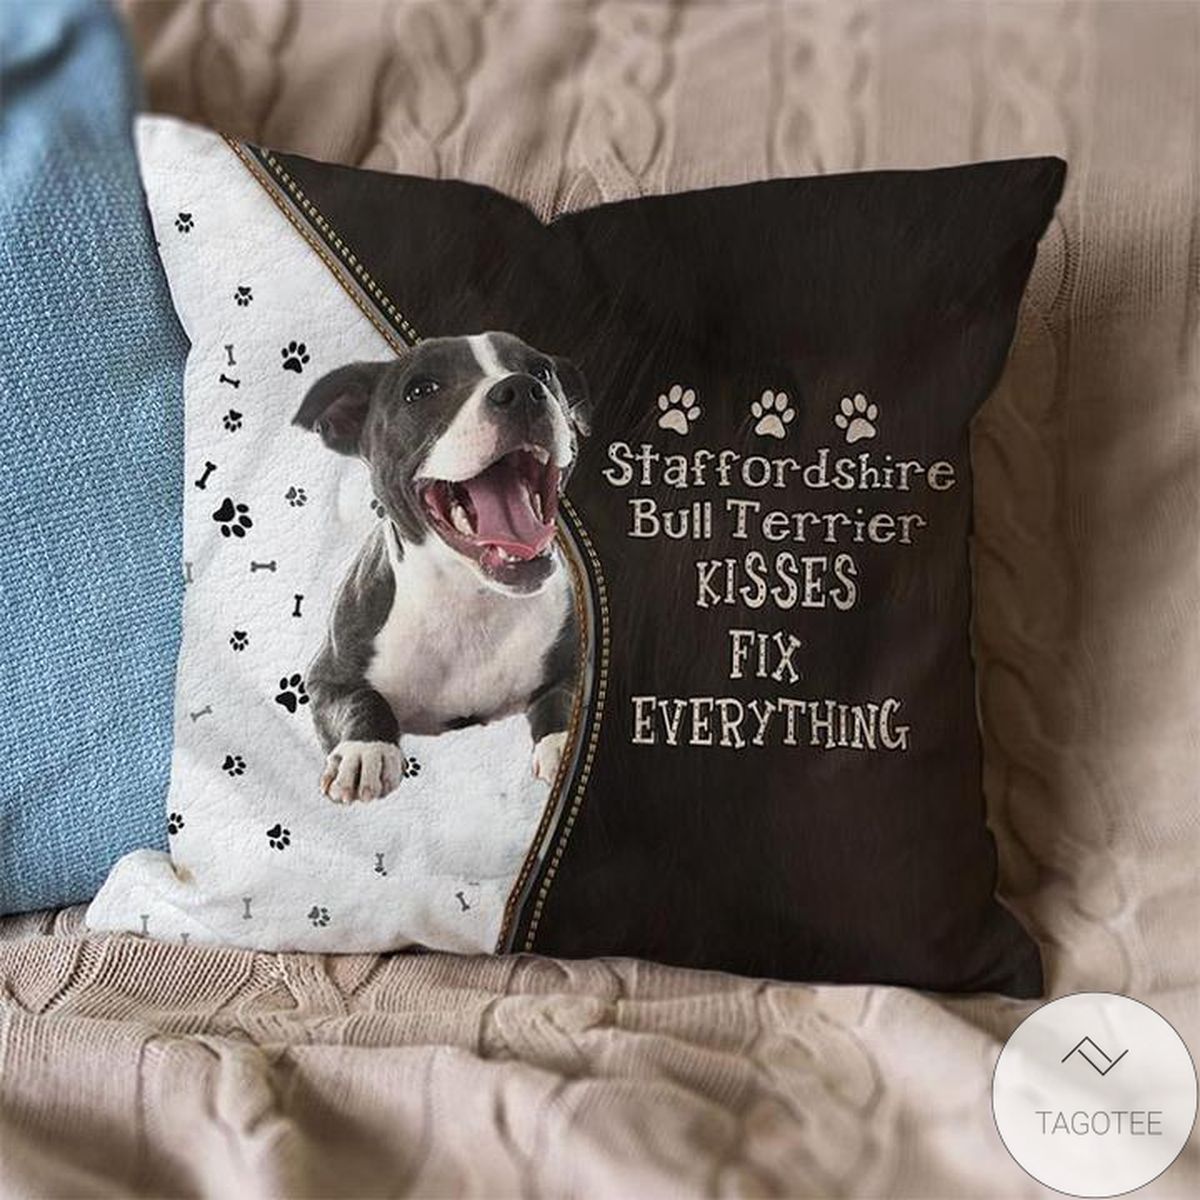 Staffordshire-Bull-Terrier Kisses Fix Everything Pillowcase